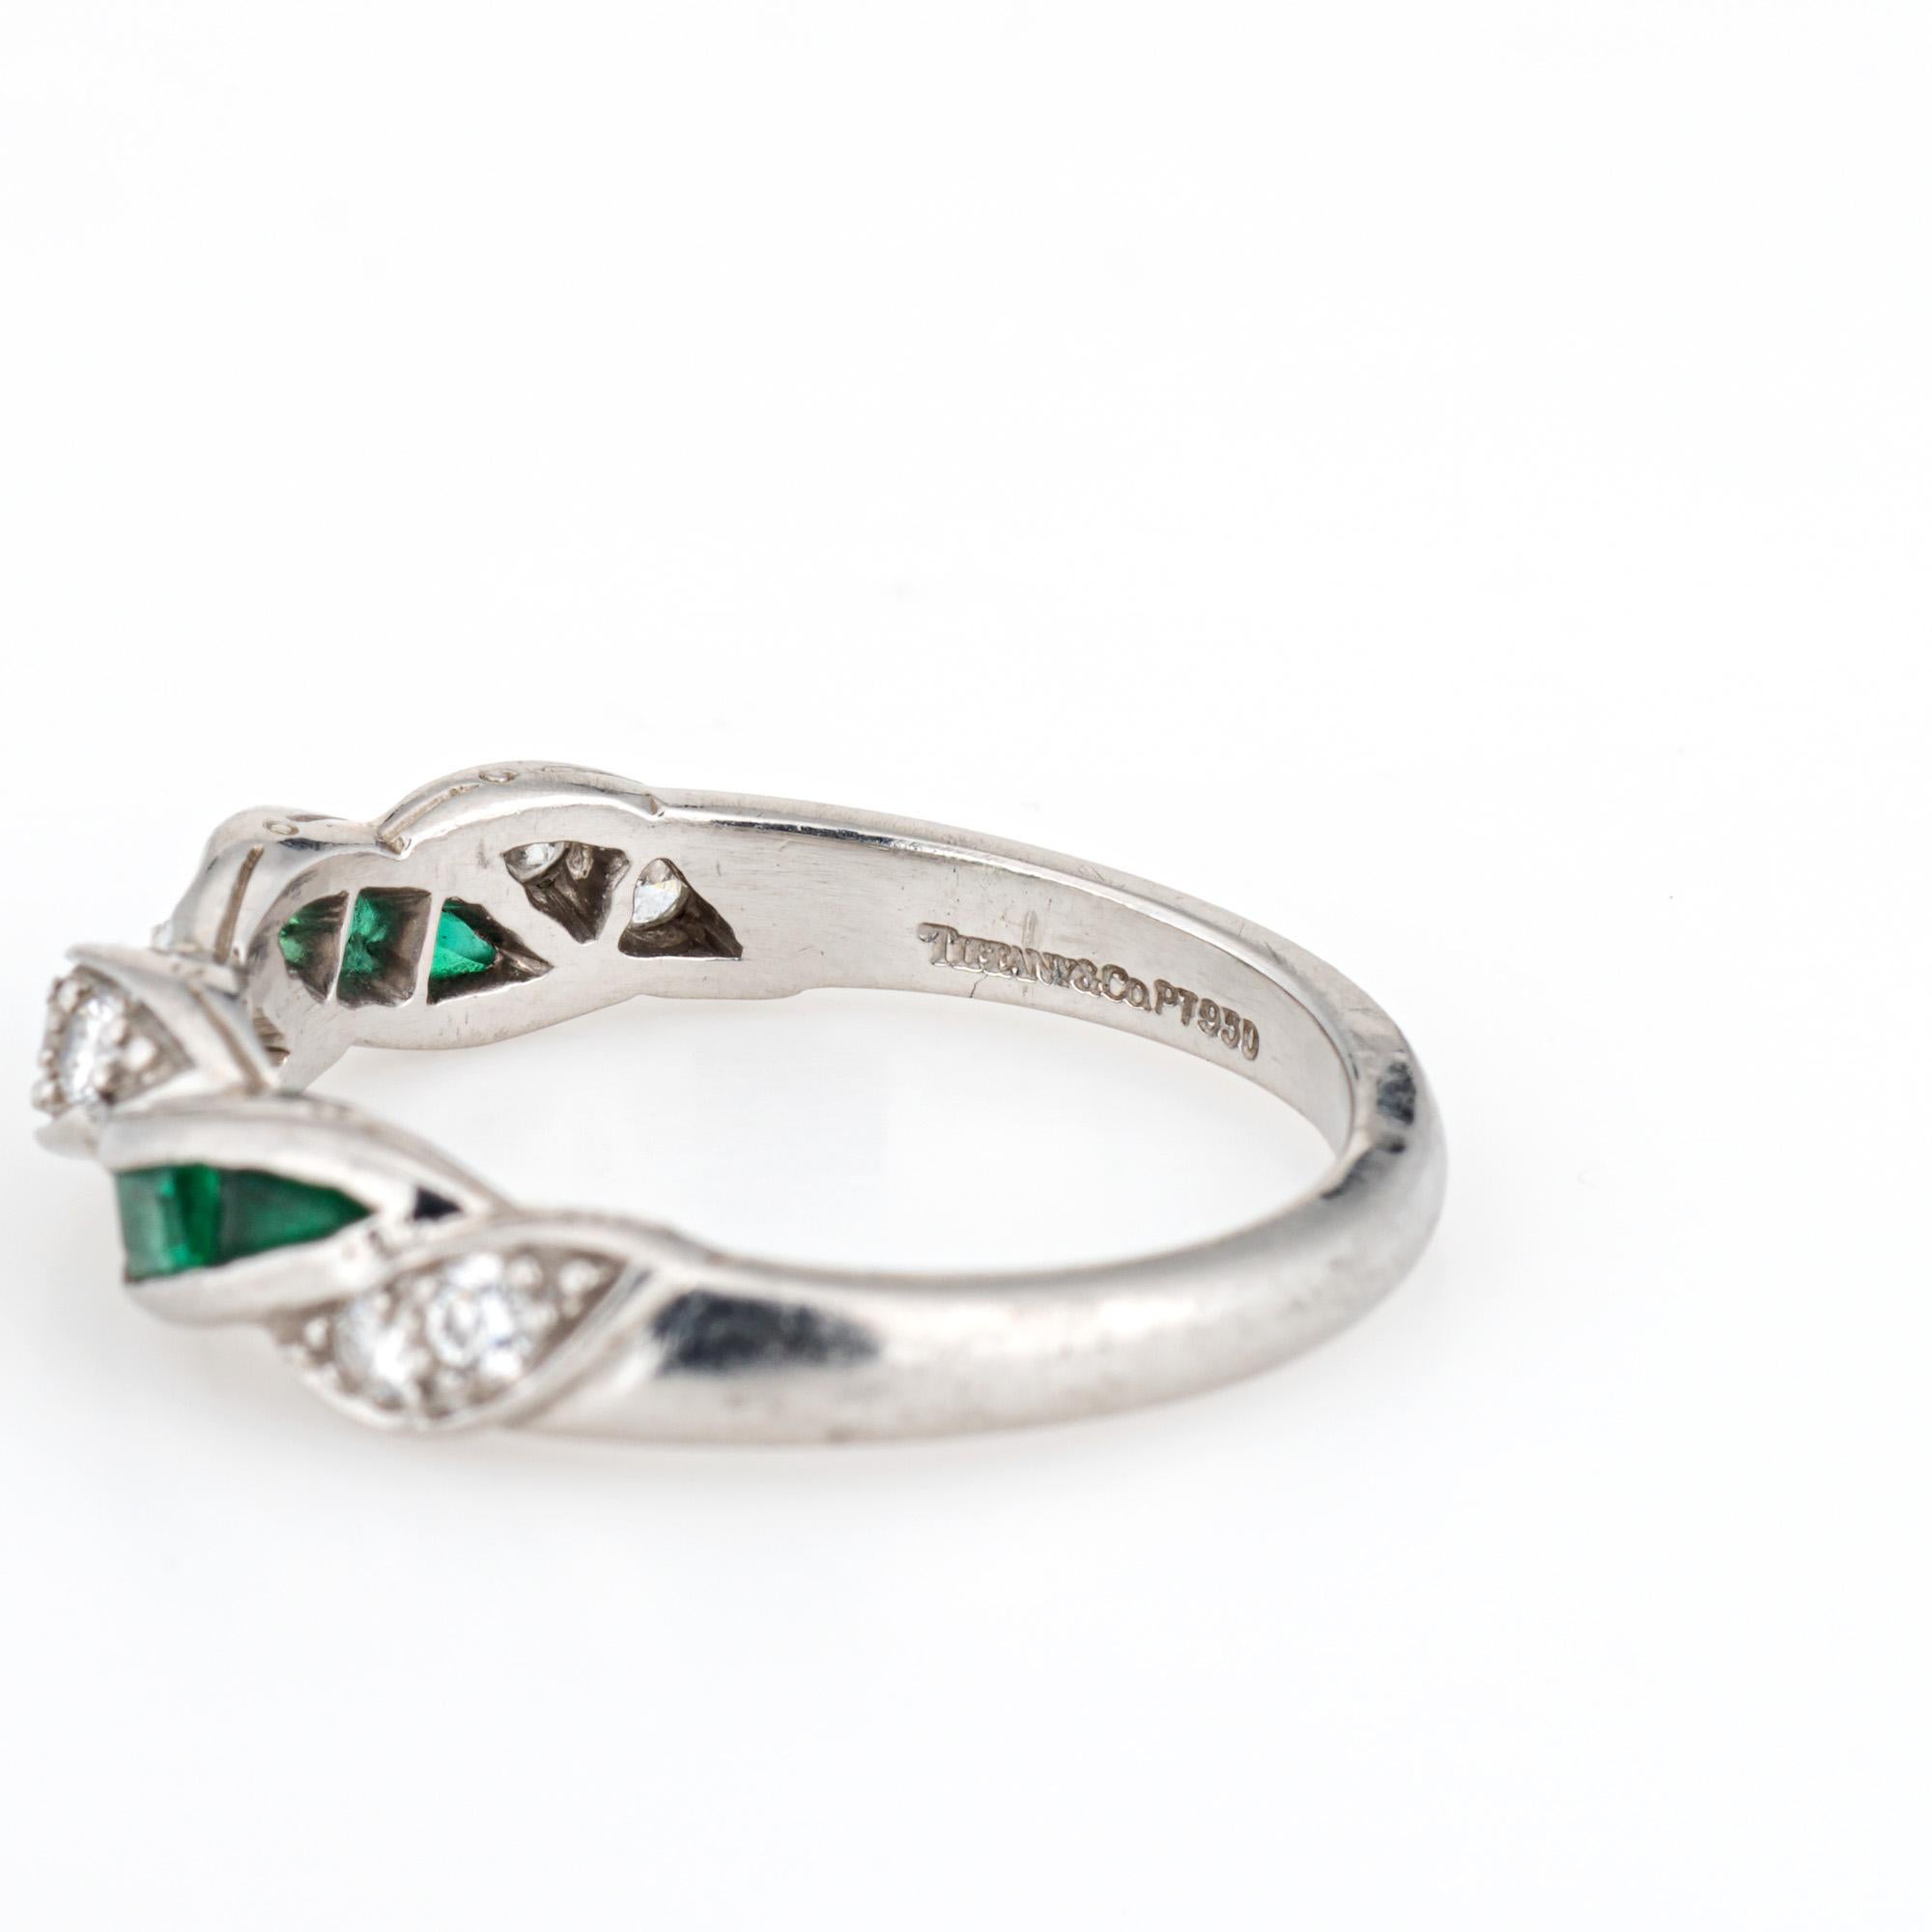 Vintage Tiffany & Co Diamond Emerald Ring Braided Sz 5.75 Platinum Band Jewelry 1